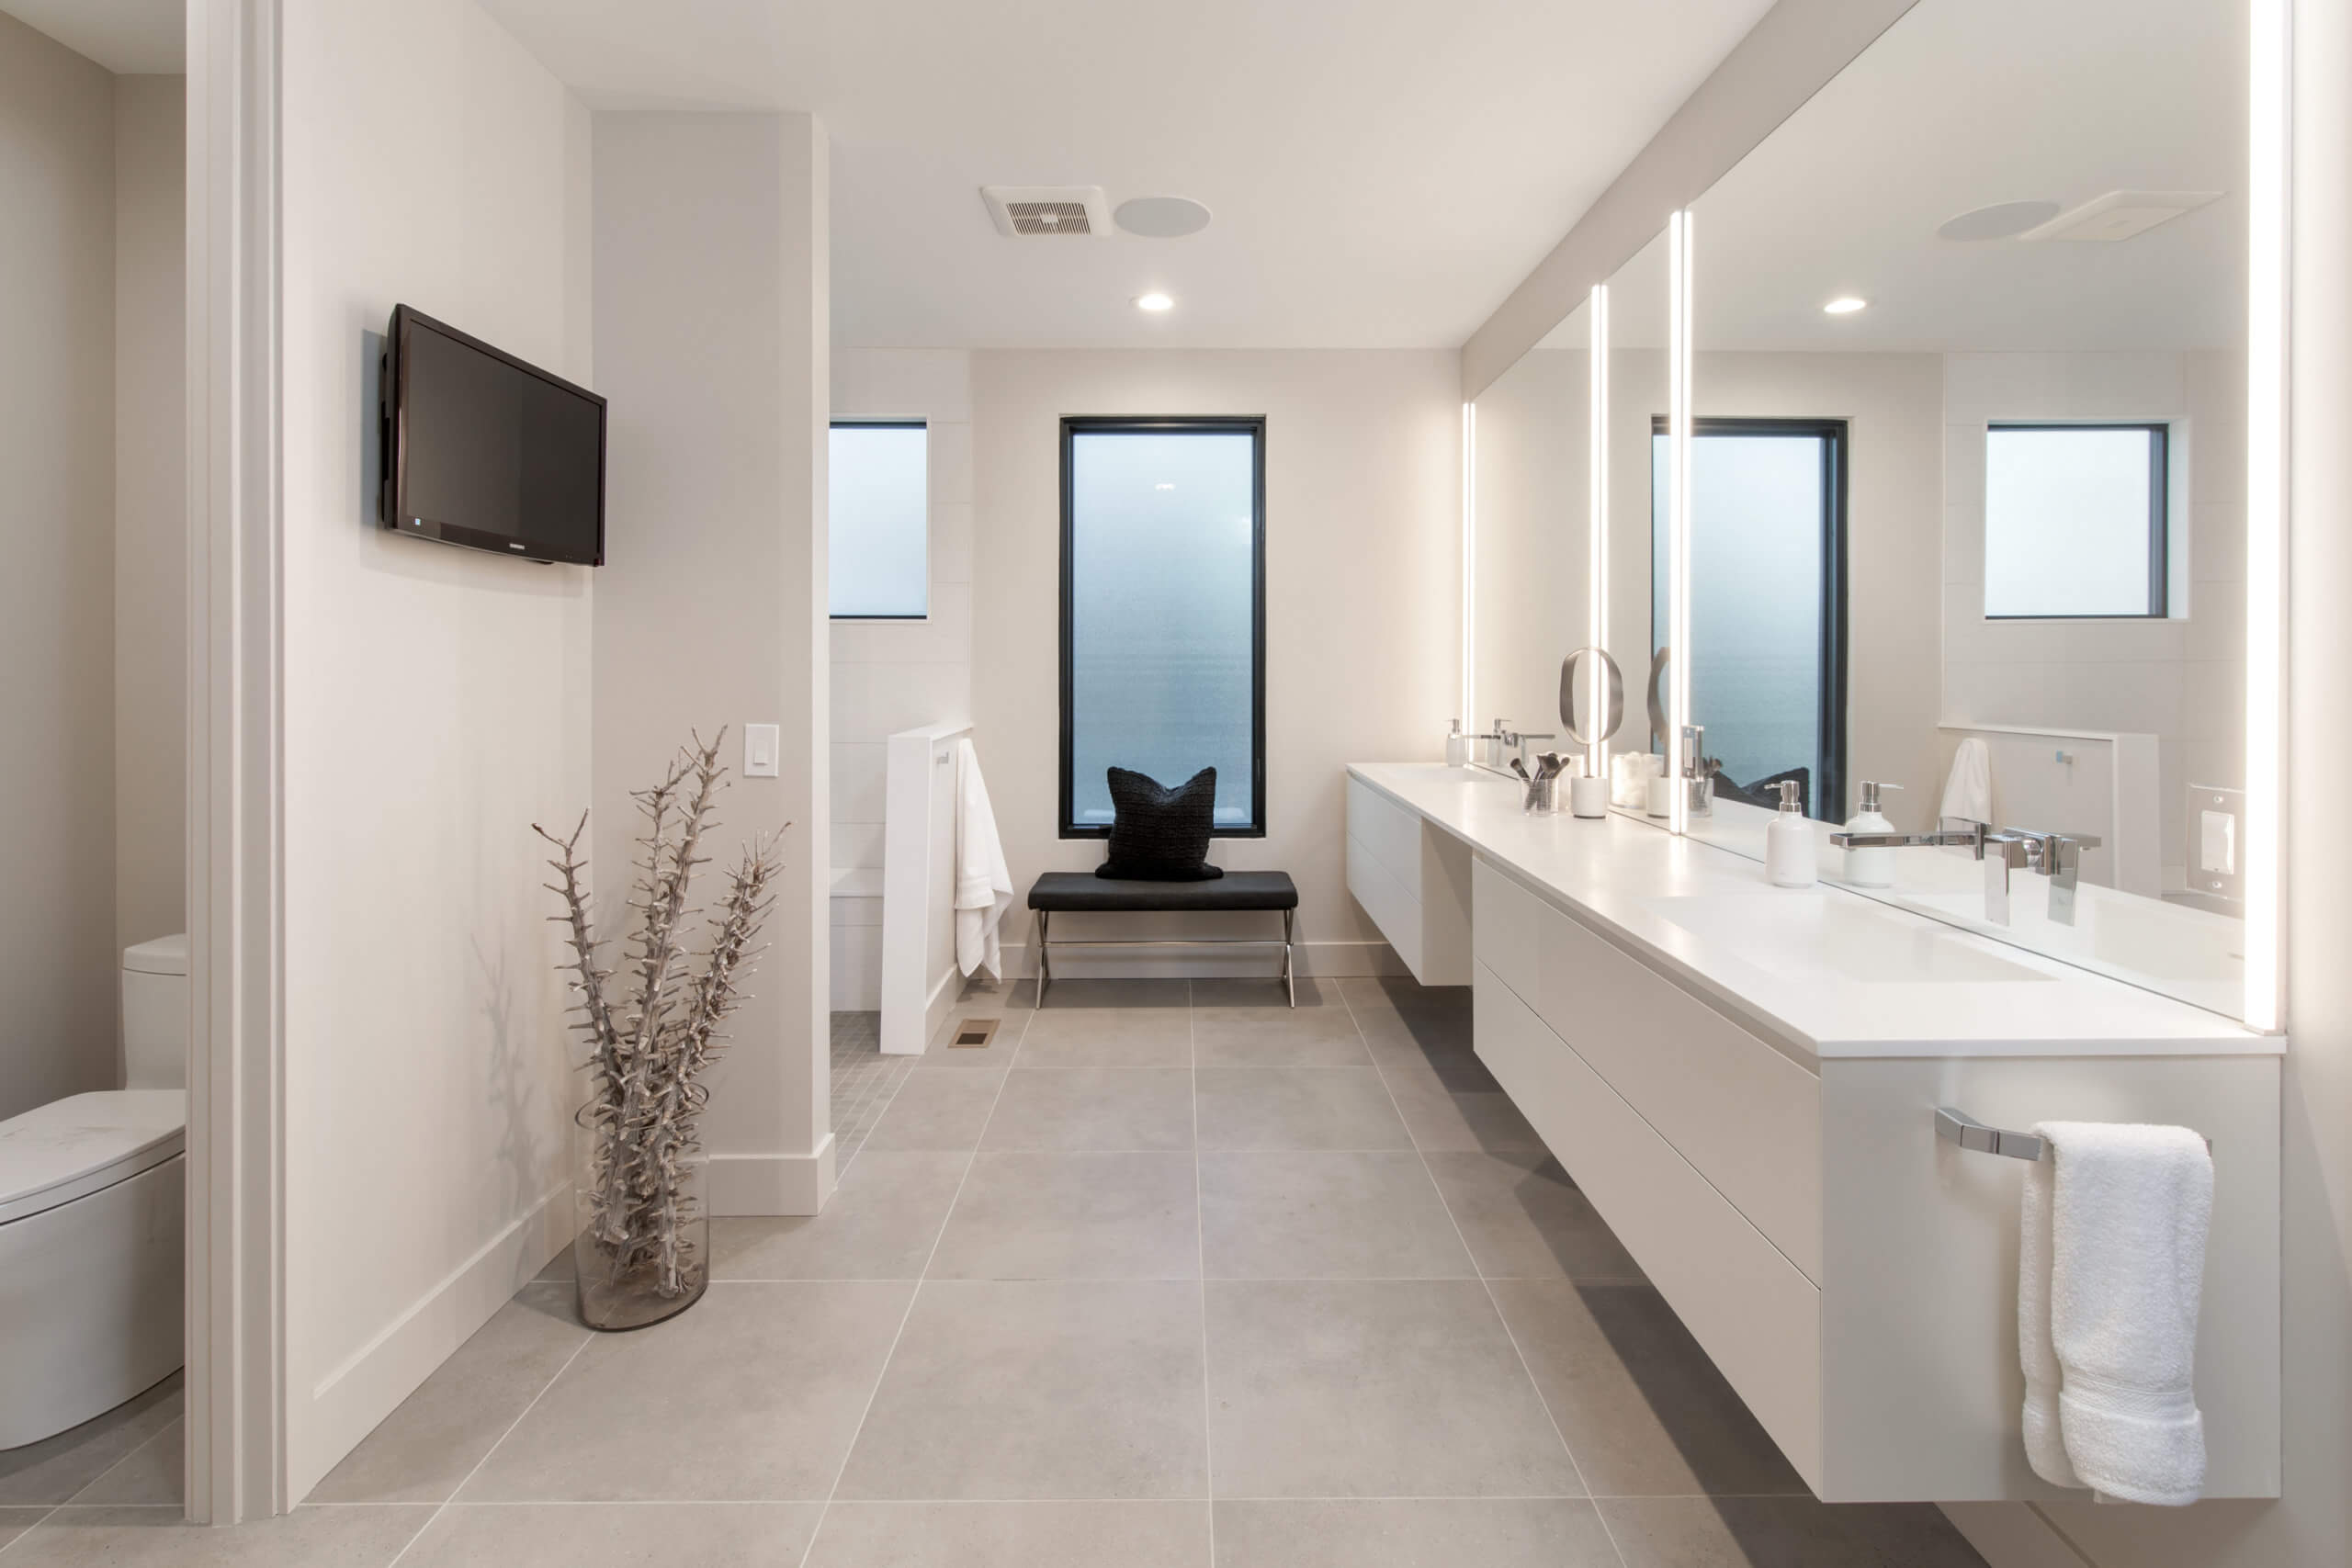 All white custom modern bathroom with custom white vanity. Bathroom designed by Cincinnati's premiere interior designer, Renan Menninger of RM Interiors.